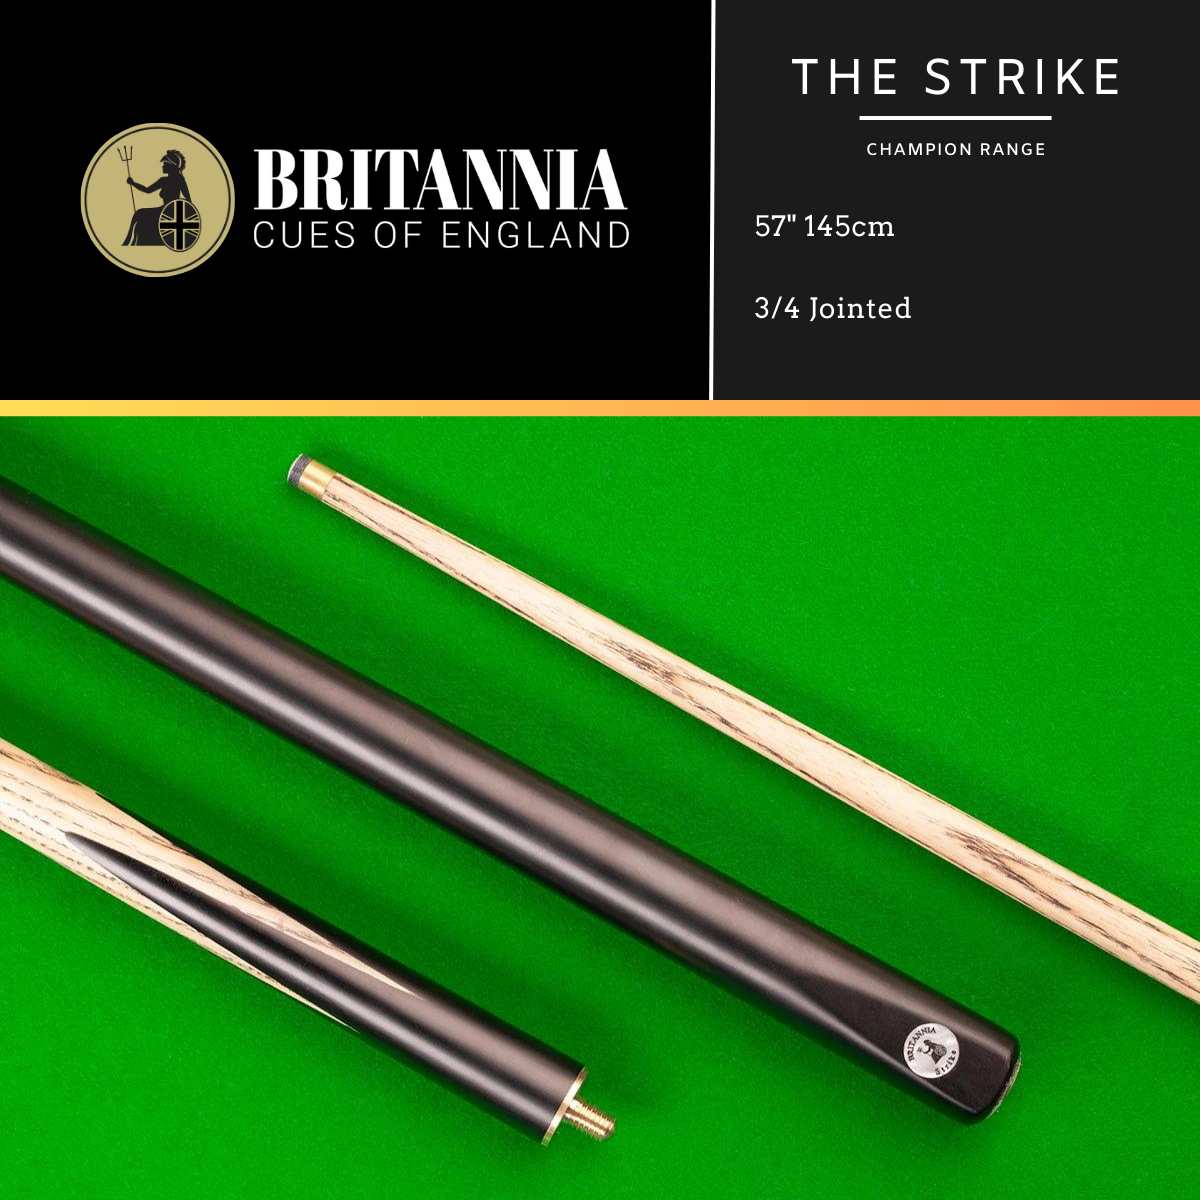 Britannia 3/4 Jointed Strike Champion Snooker Cue